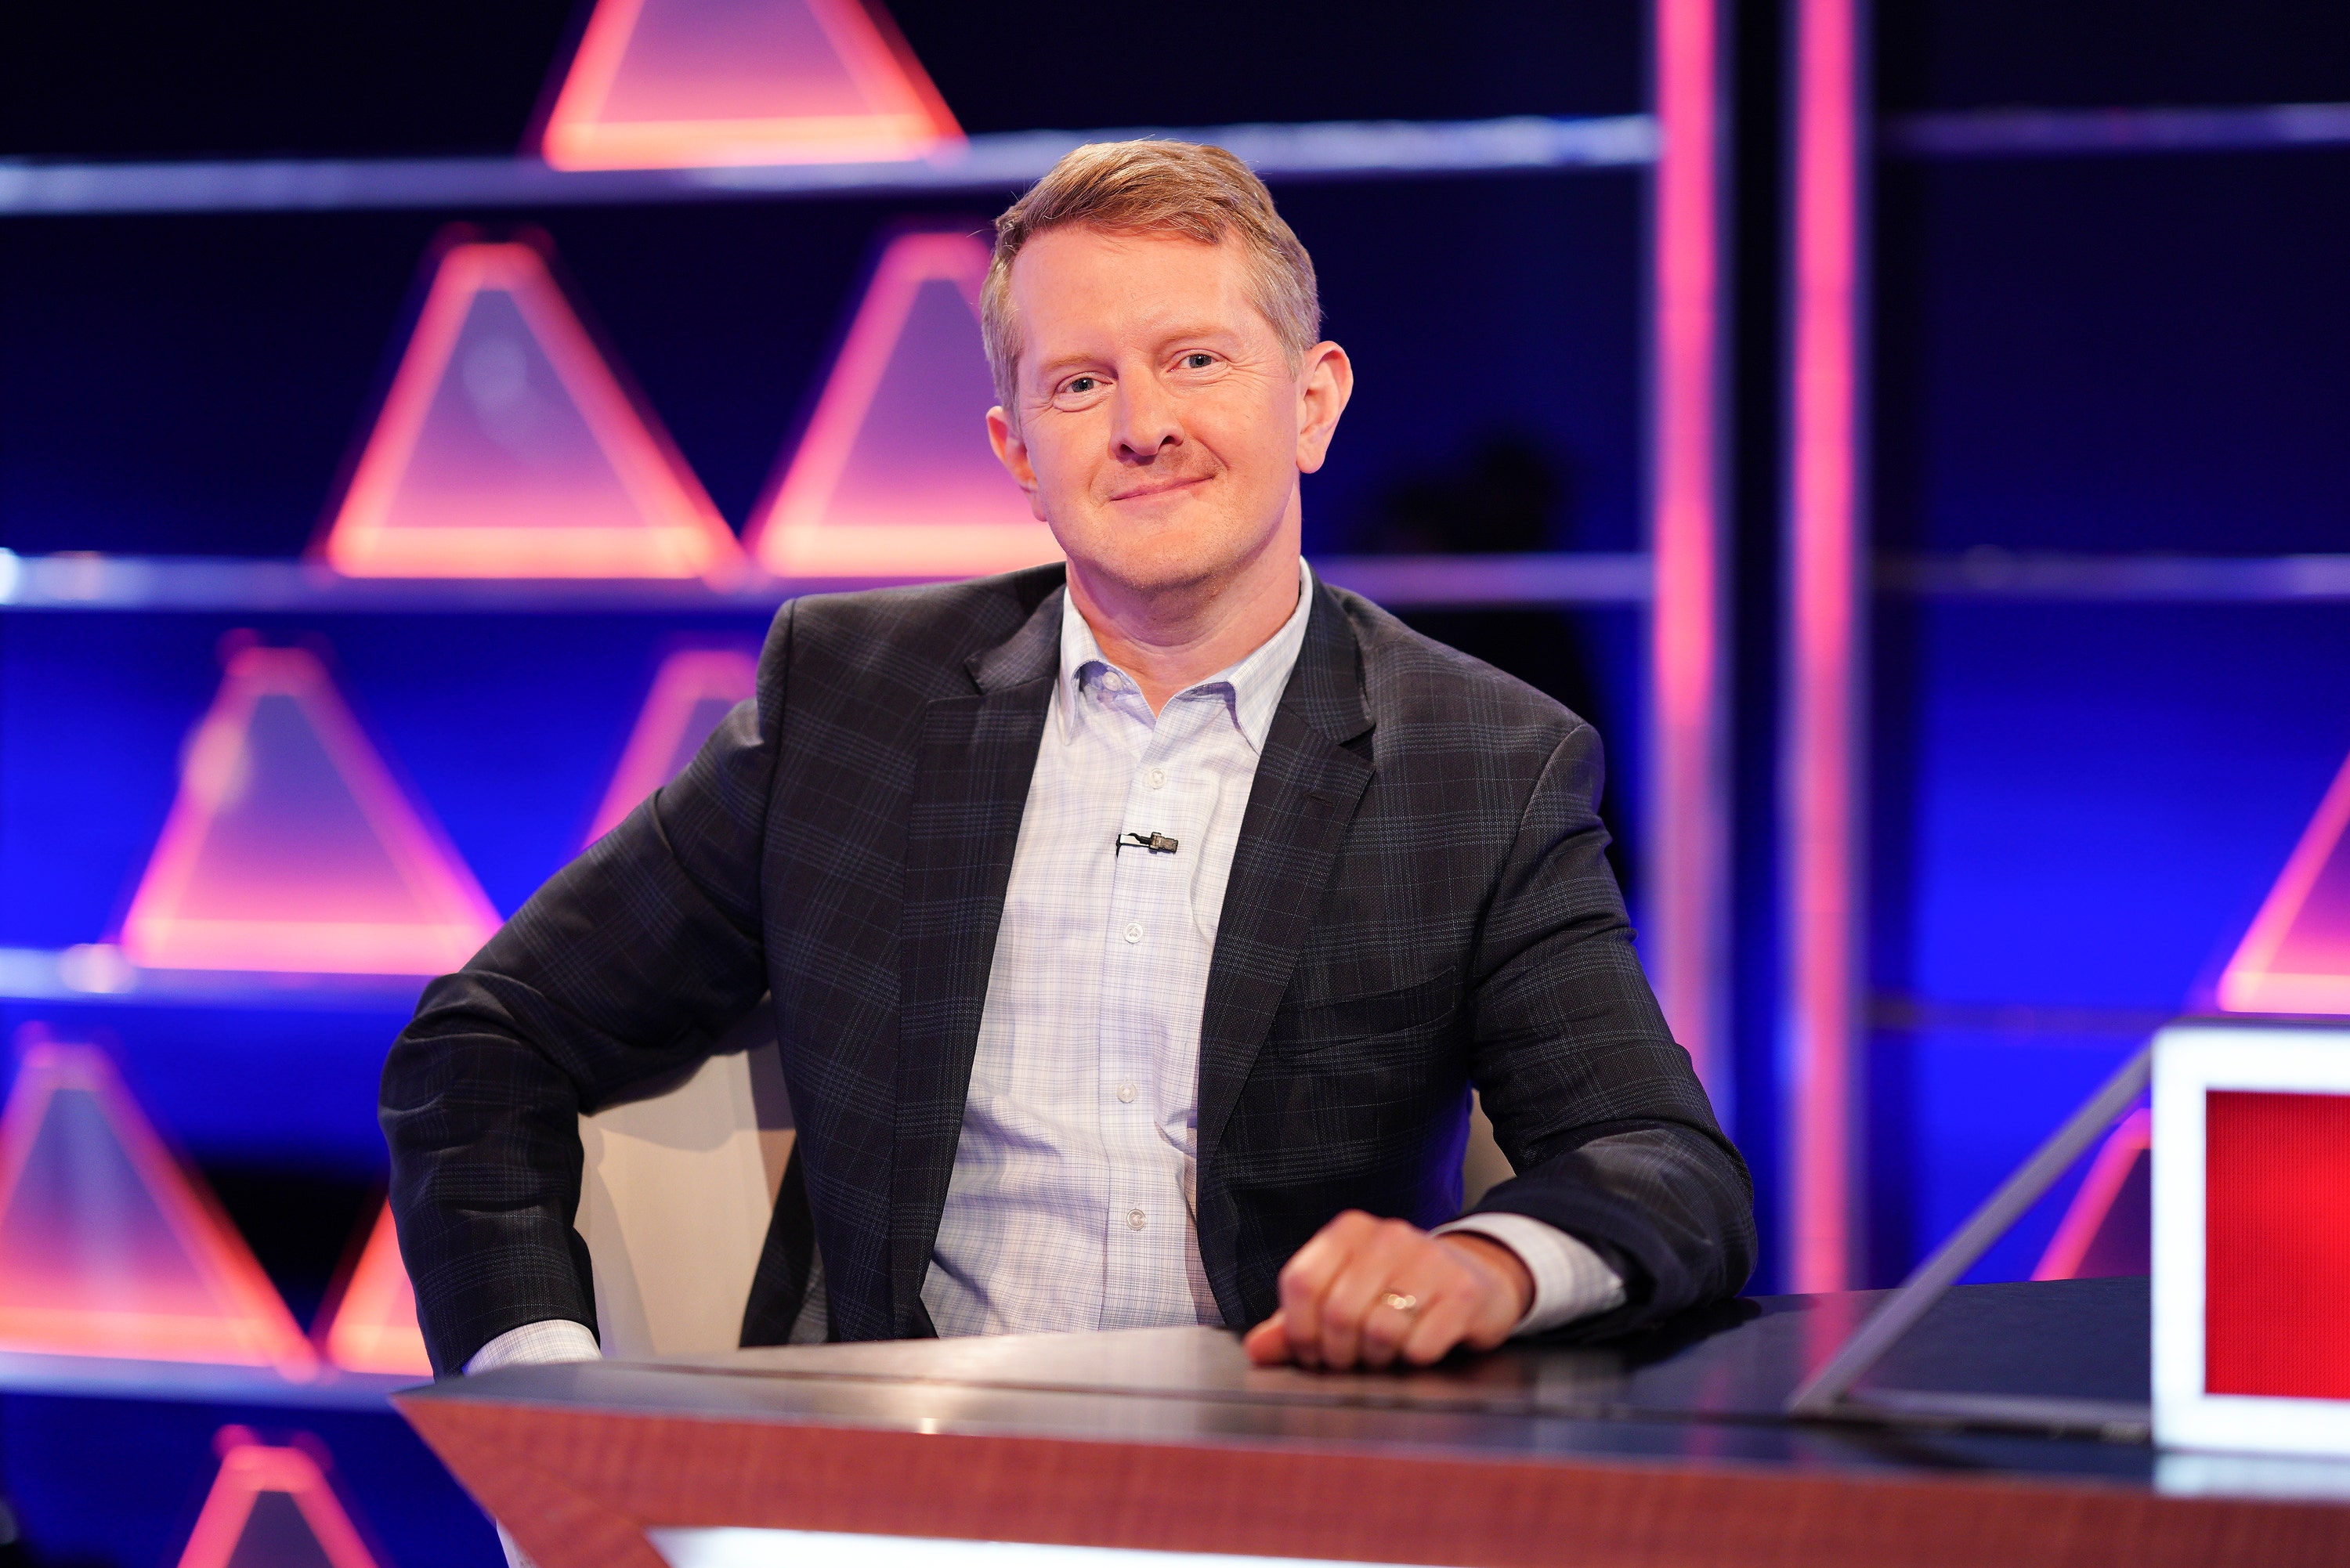 'Jeopardy!' host Ken Jennings leaves fans baffled as he loses game show